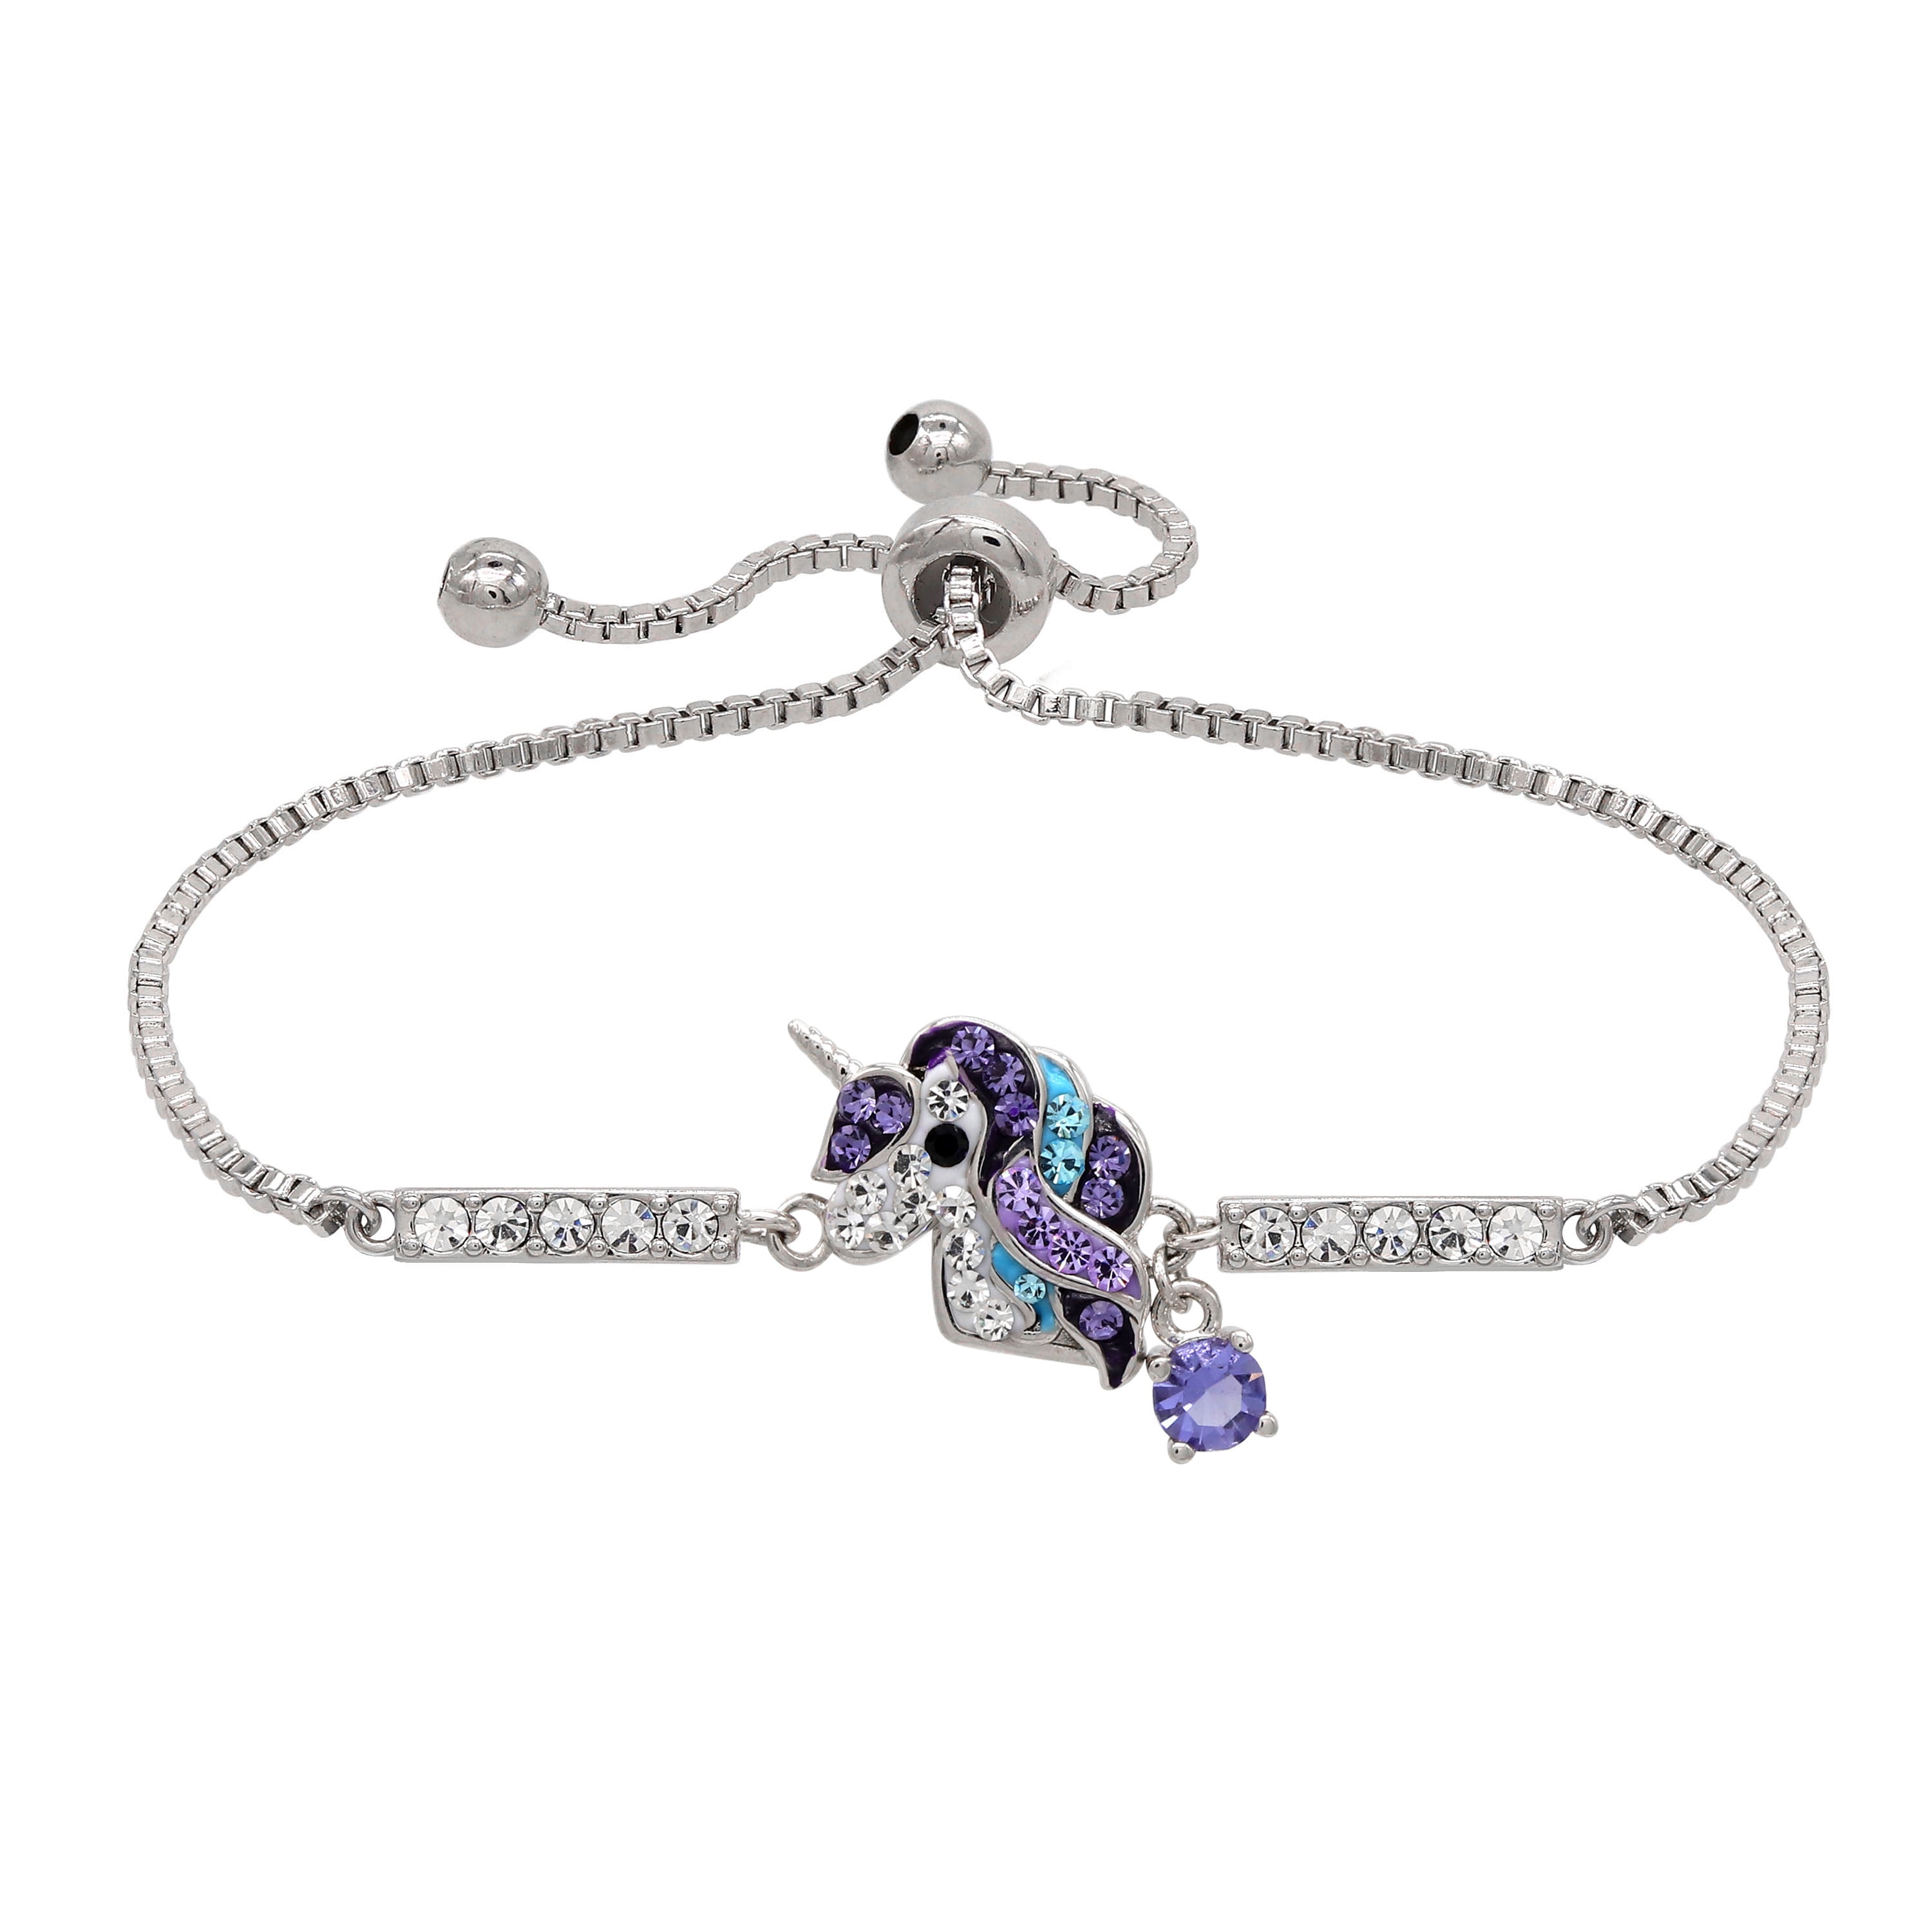 Artwork Store Adjustable Silver Bracelets Cute Cat Face Charming Fashion Chain Link Bracelets Jewelry for Women